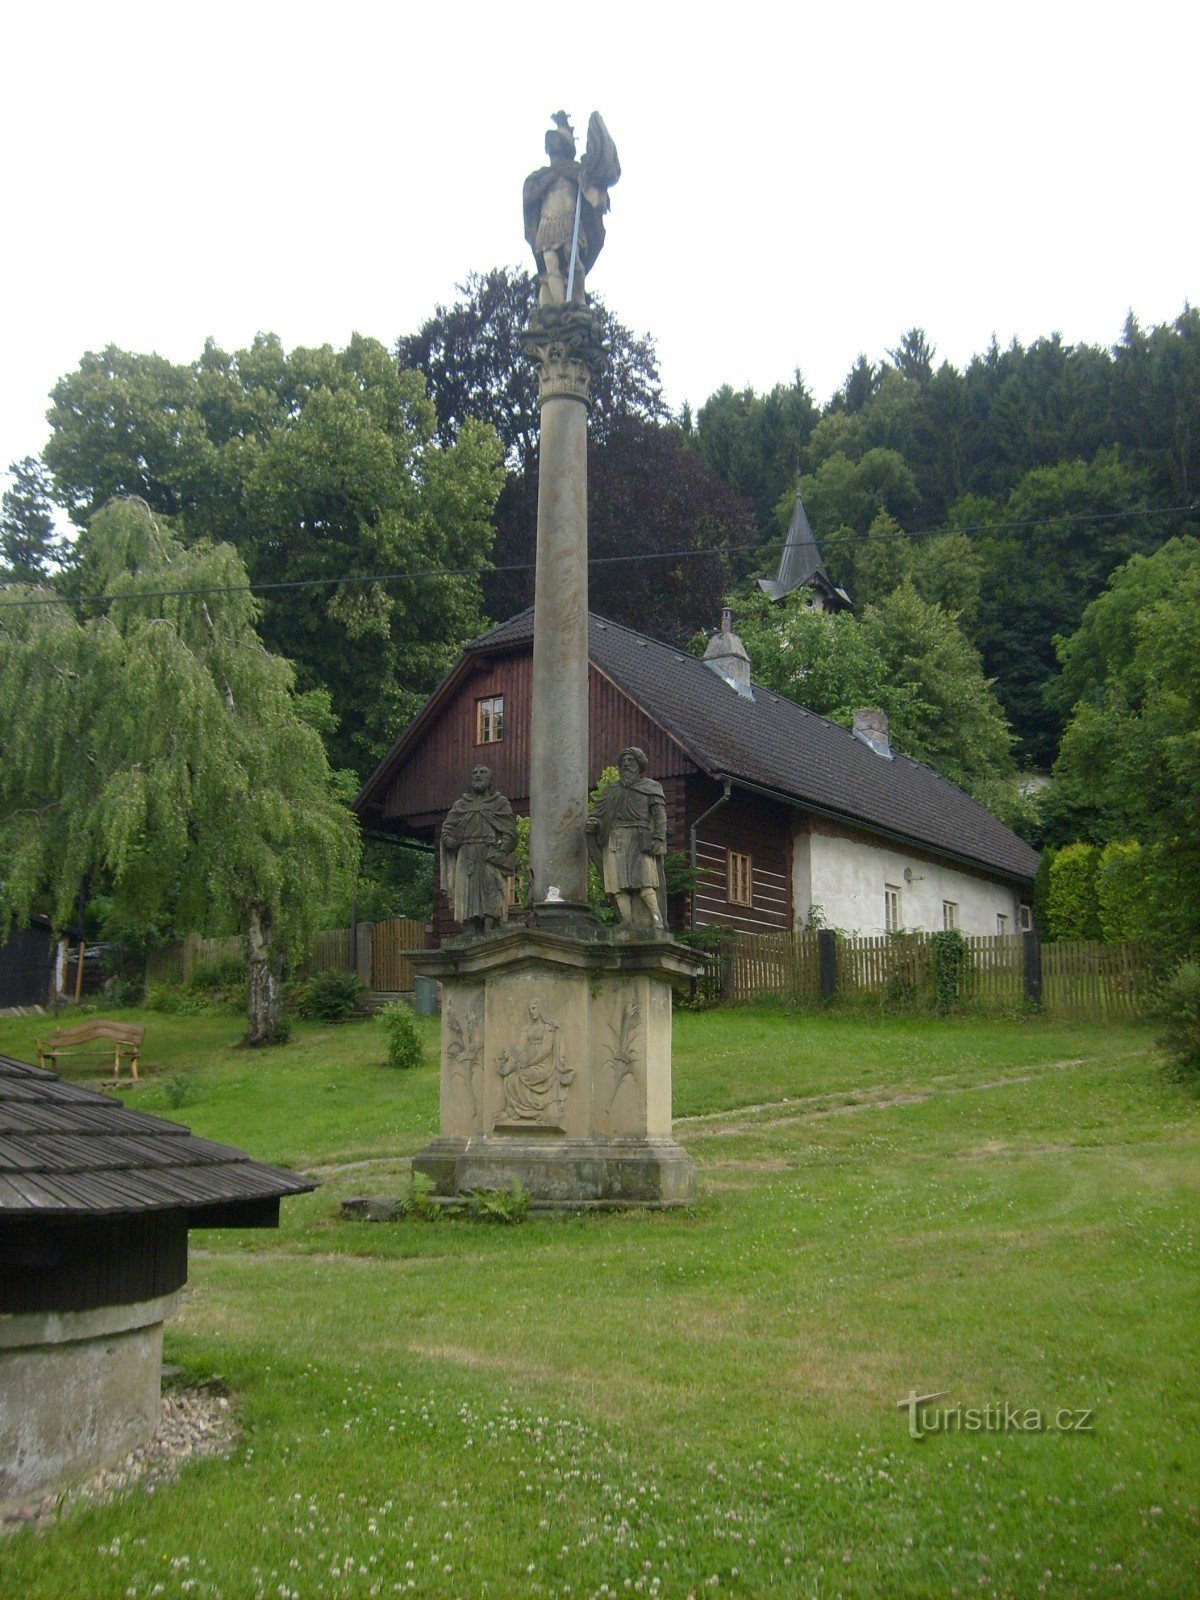 Марианская колонна в деревне Потштейн